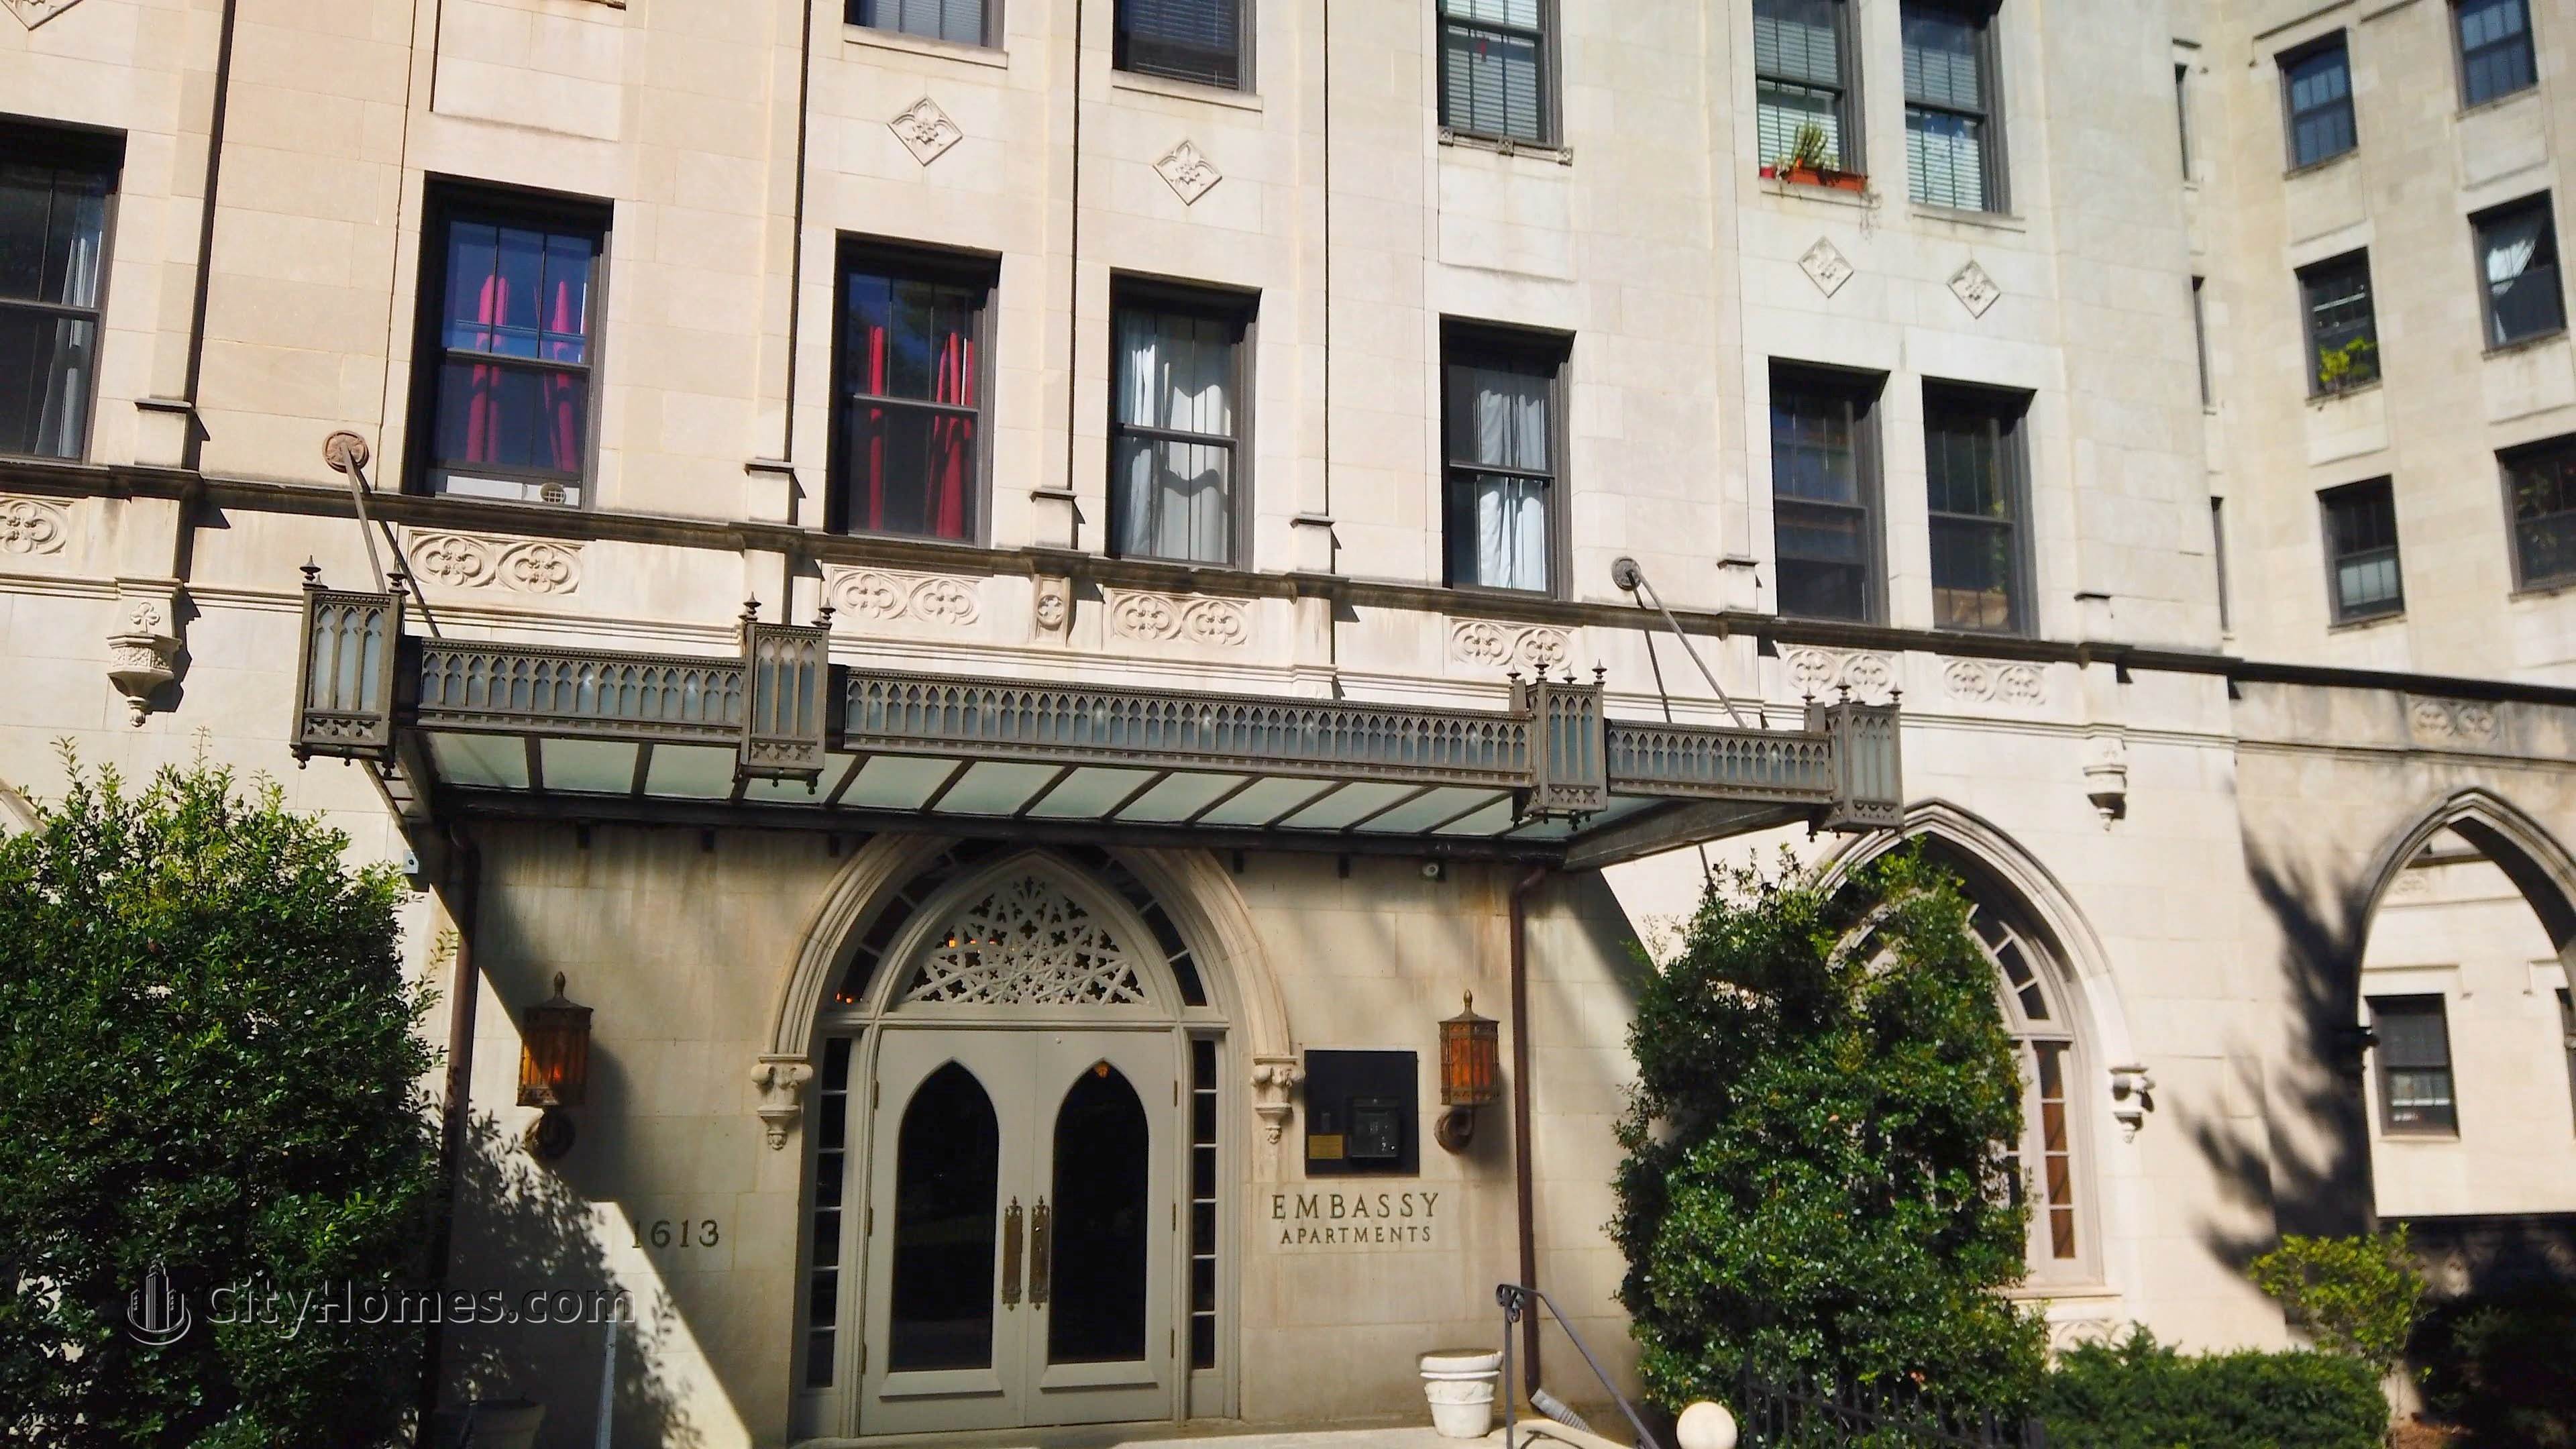 The Embassy byggnad vid 1613 Harvard St NW, Mount Pleasant, Washington, DC 20009